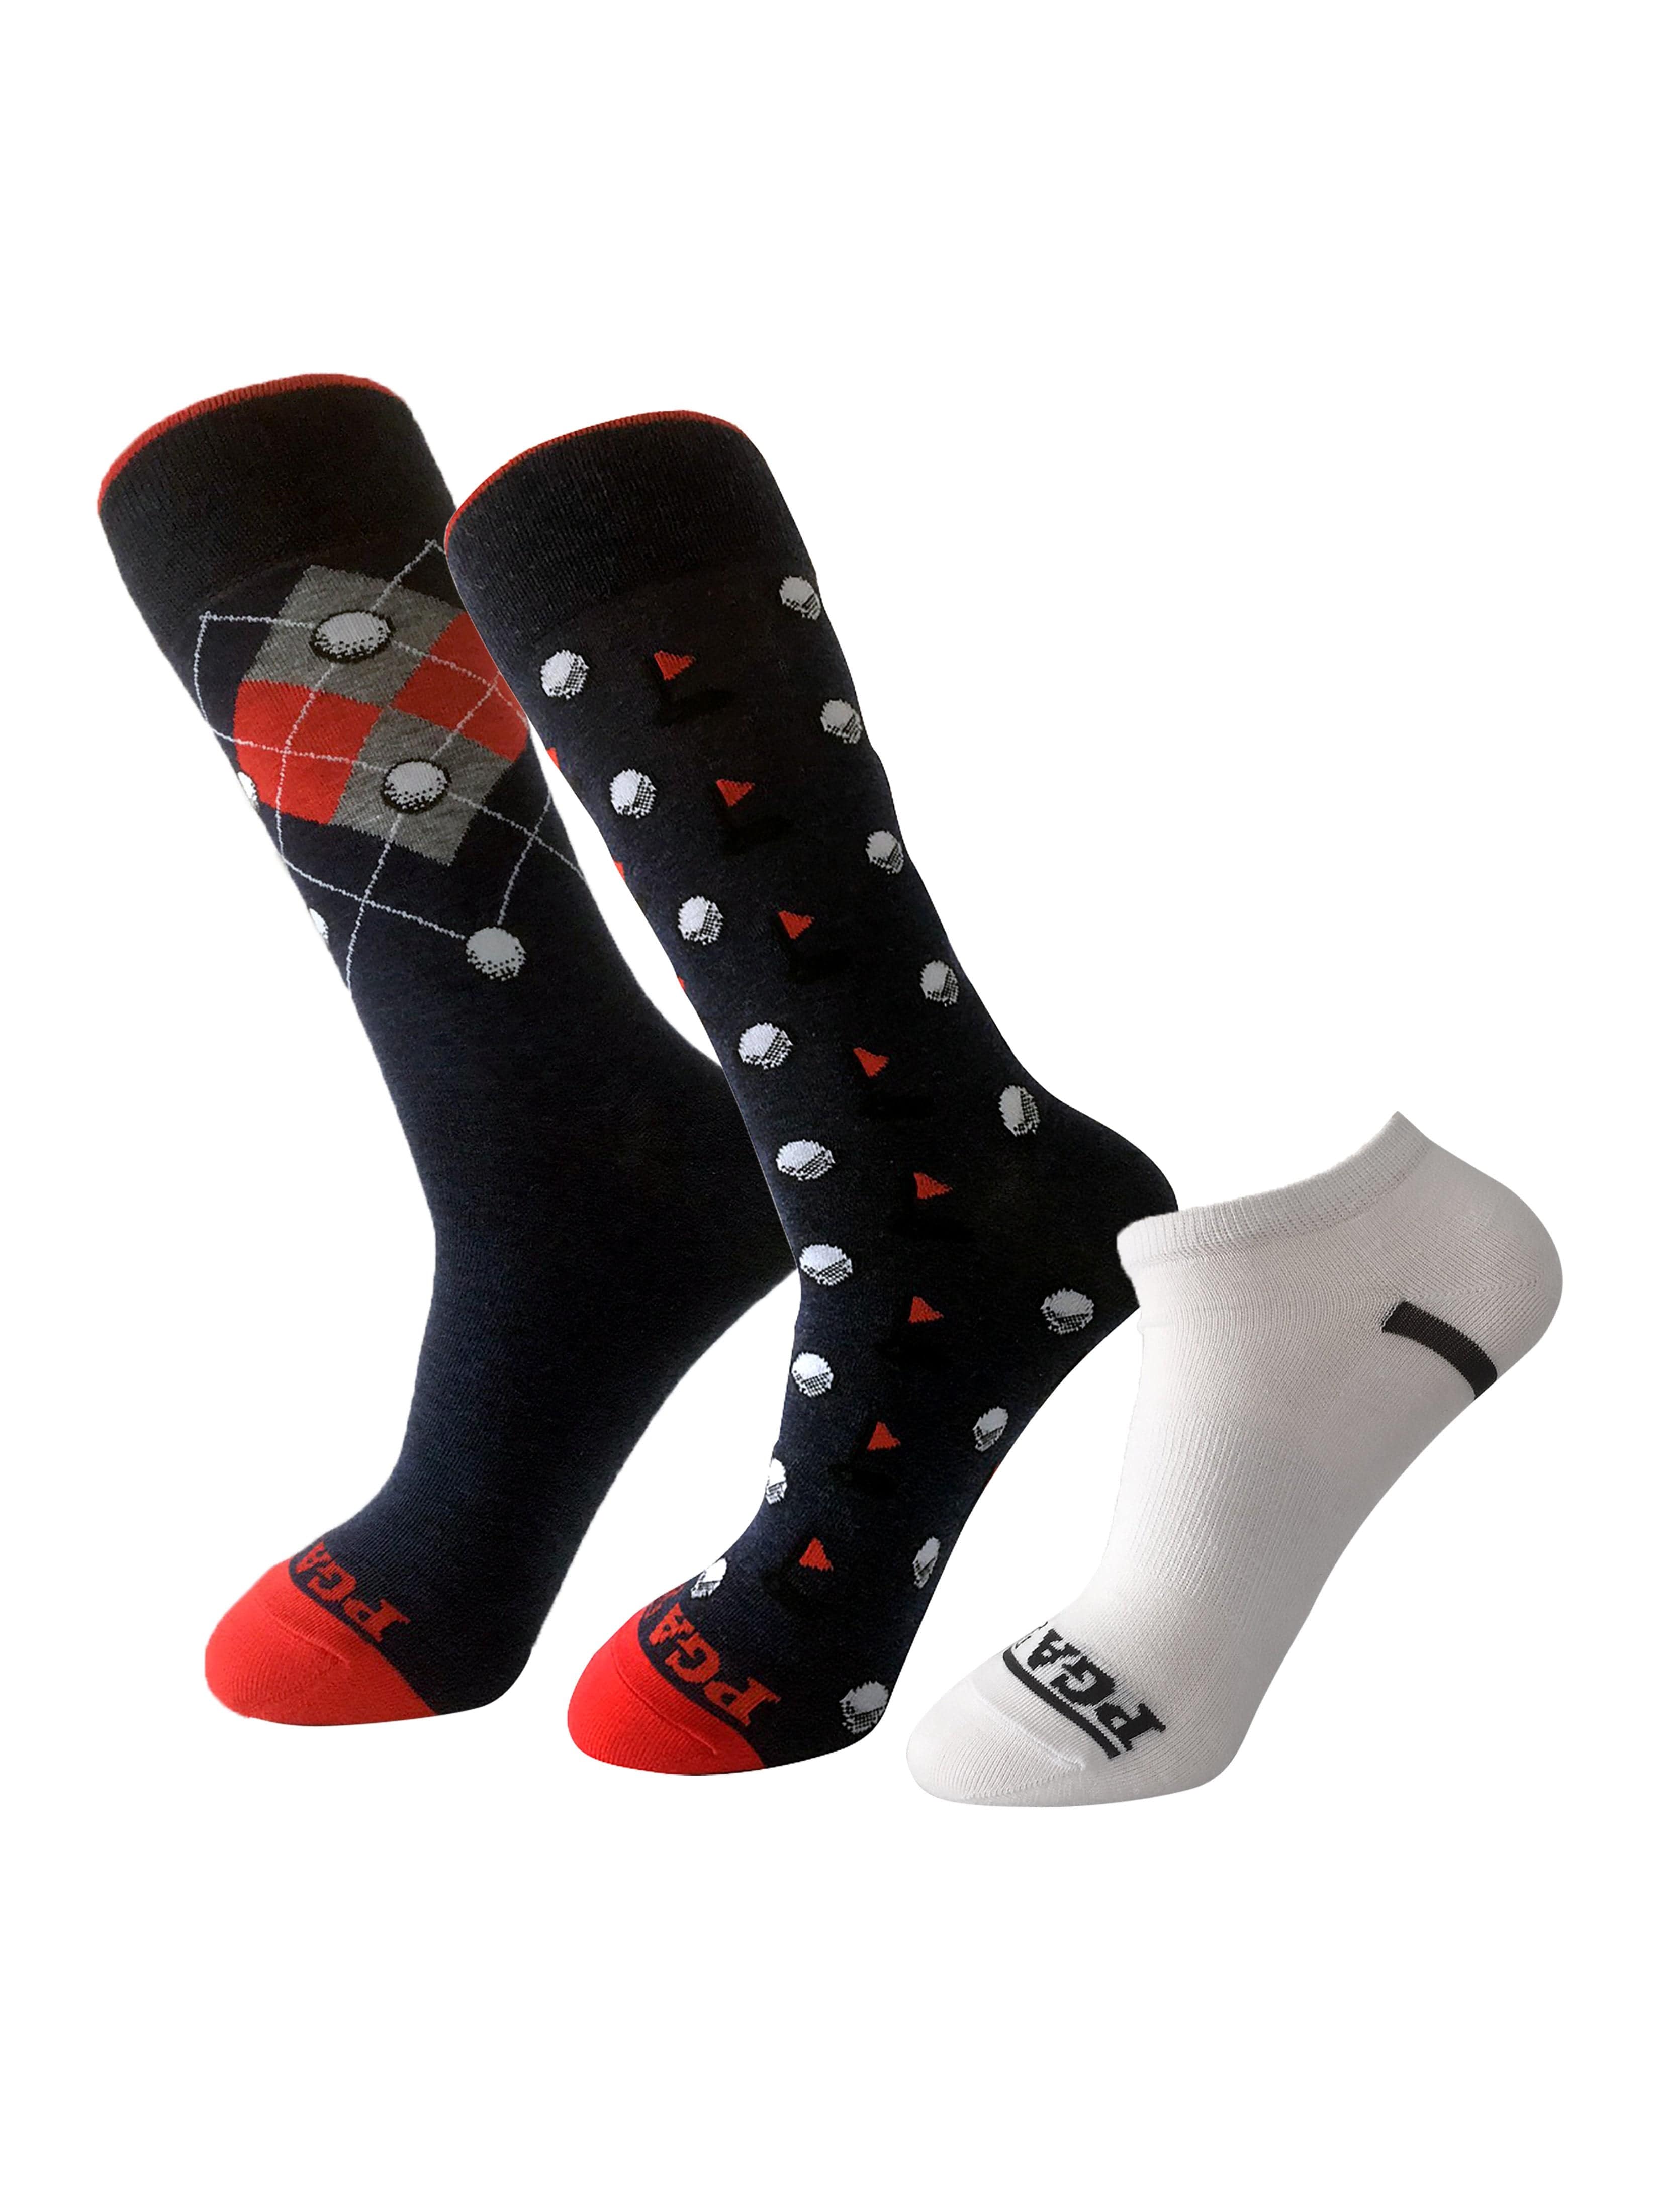 PGA TOUR Apparel Mens 3-Pack Socks Gift Set, Red | Golf Apparel Shop